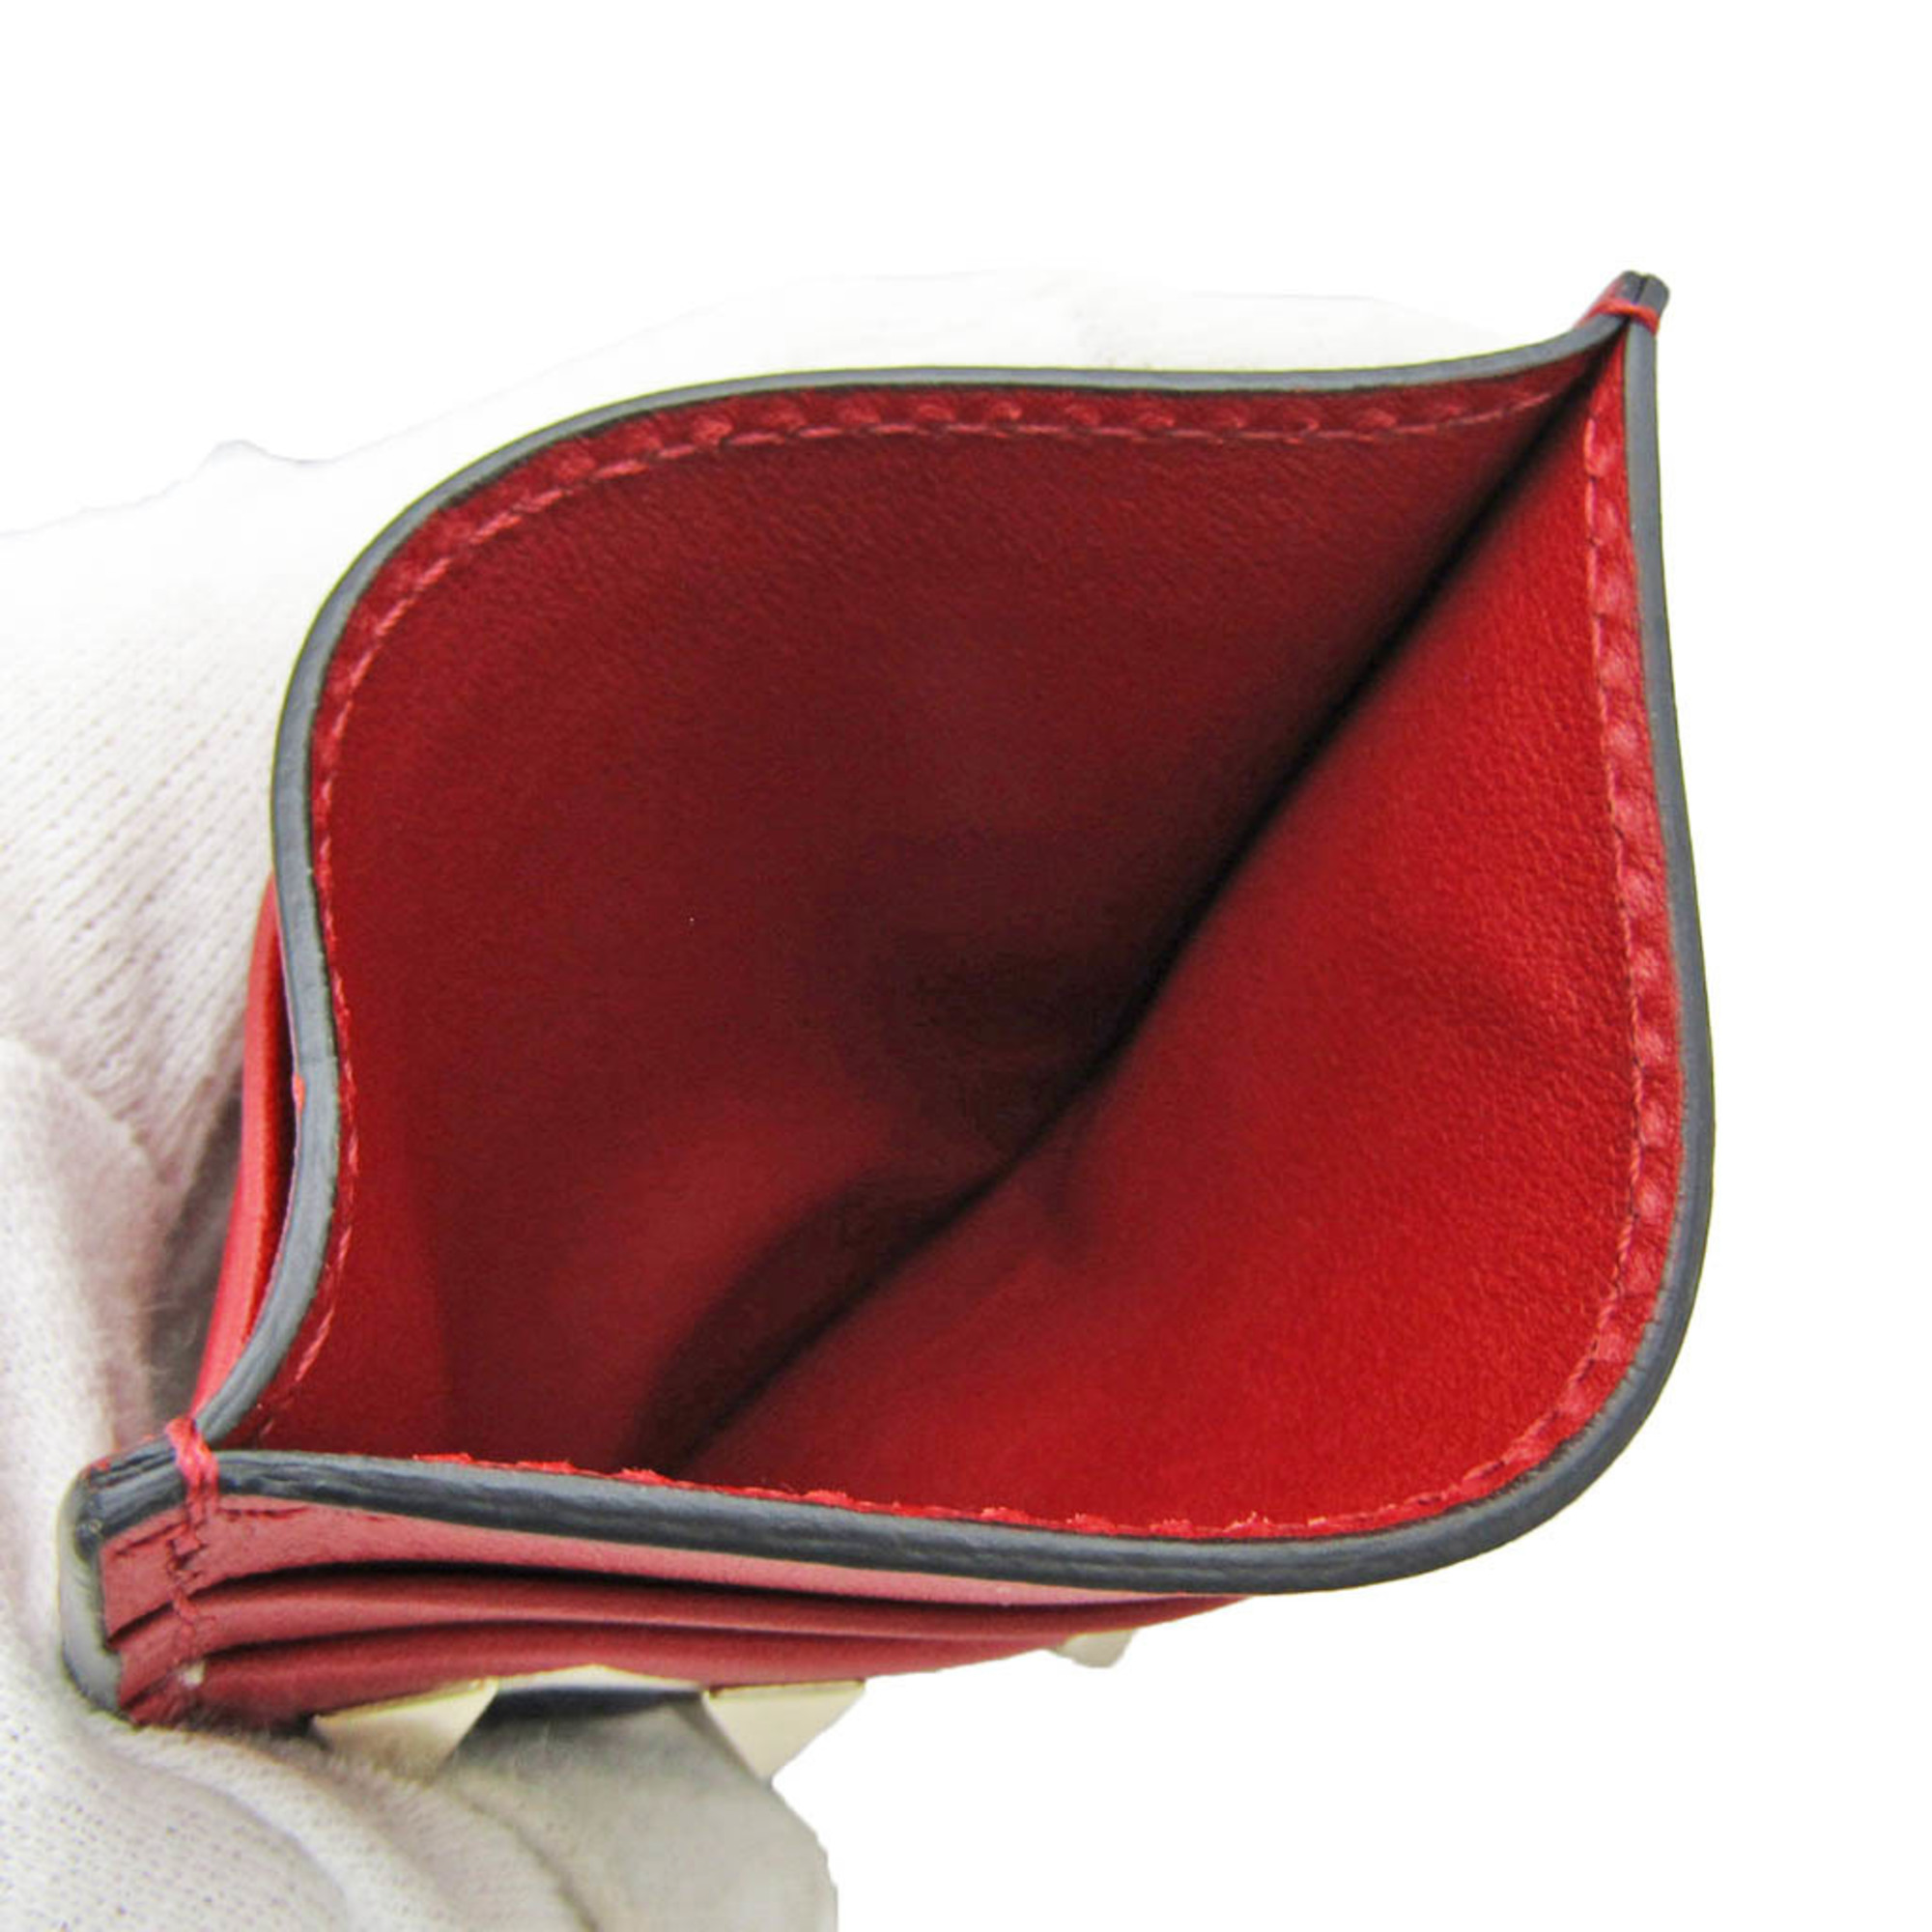 Valentino Garavani Lockstuds Leather Card Case Navy,Off-white,Red Color